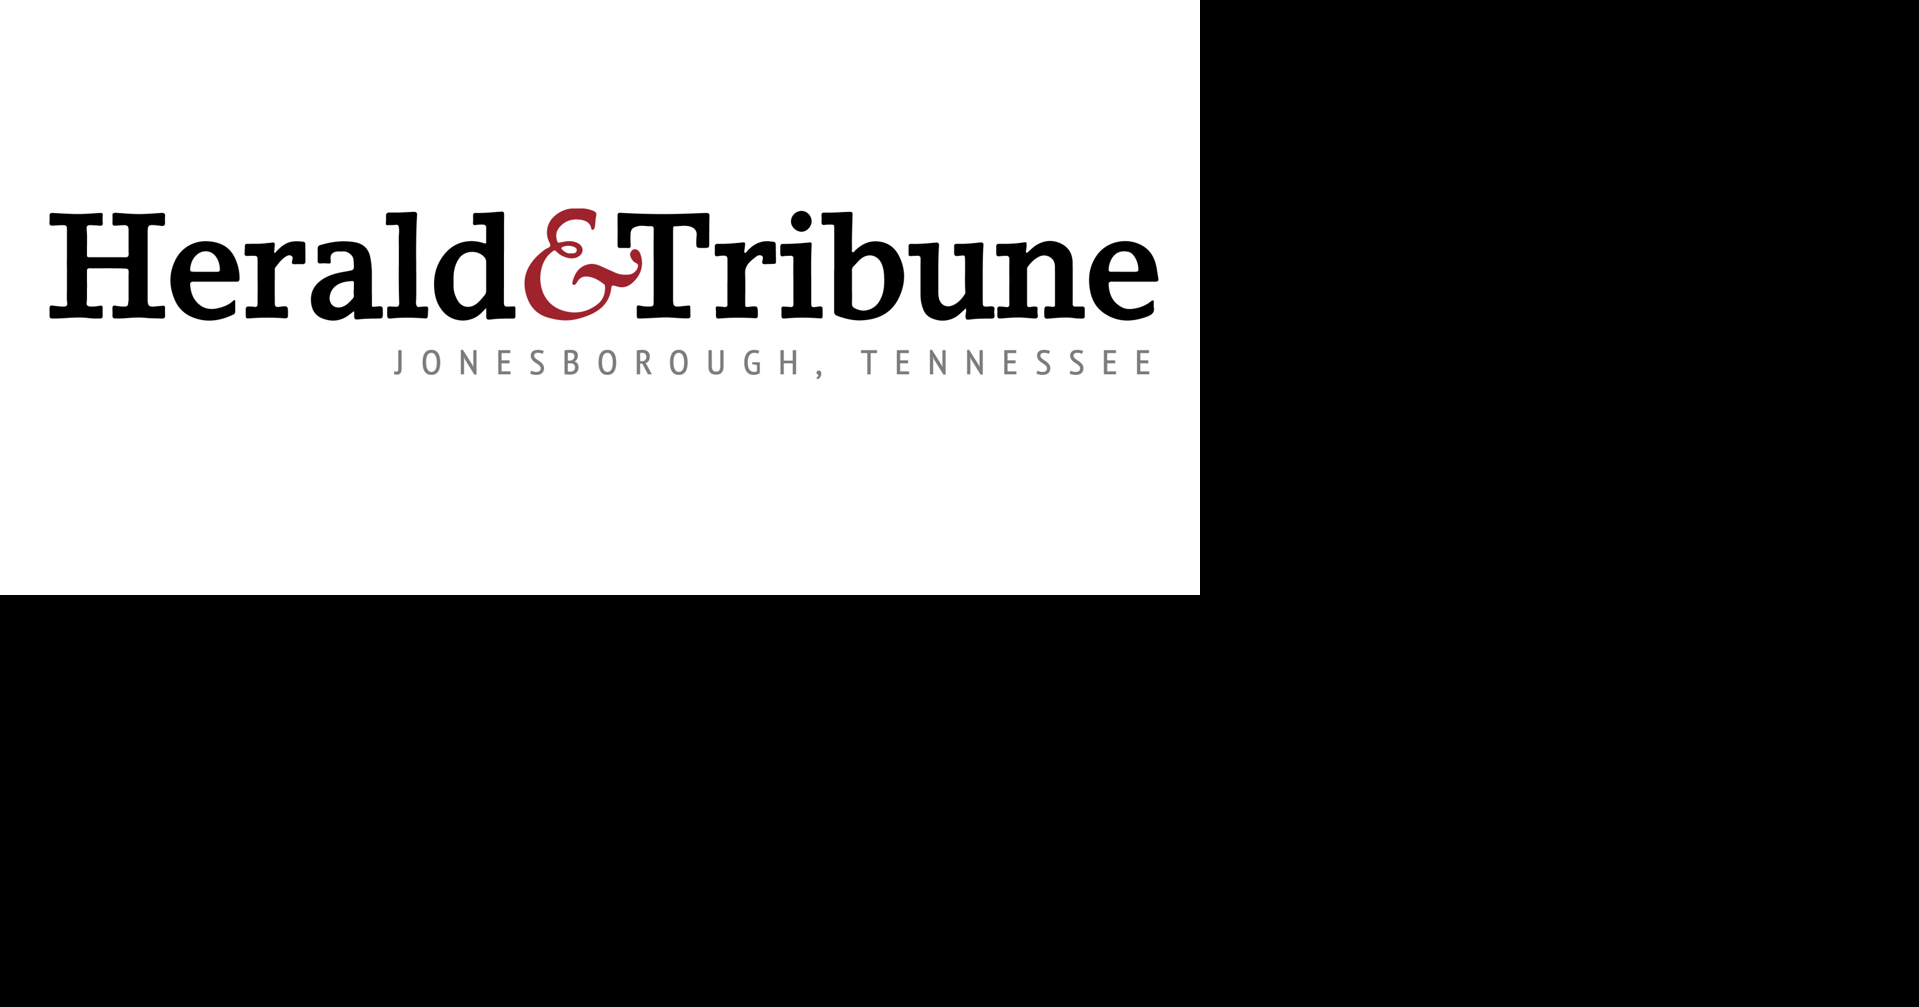 Herald & Tribune earns pair of investigative reporting awards